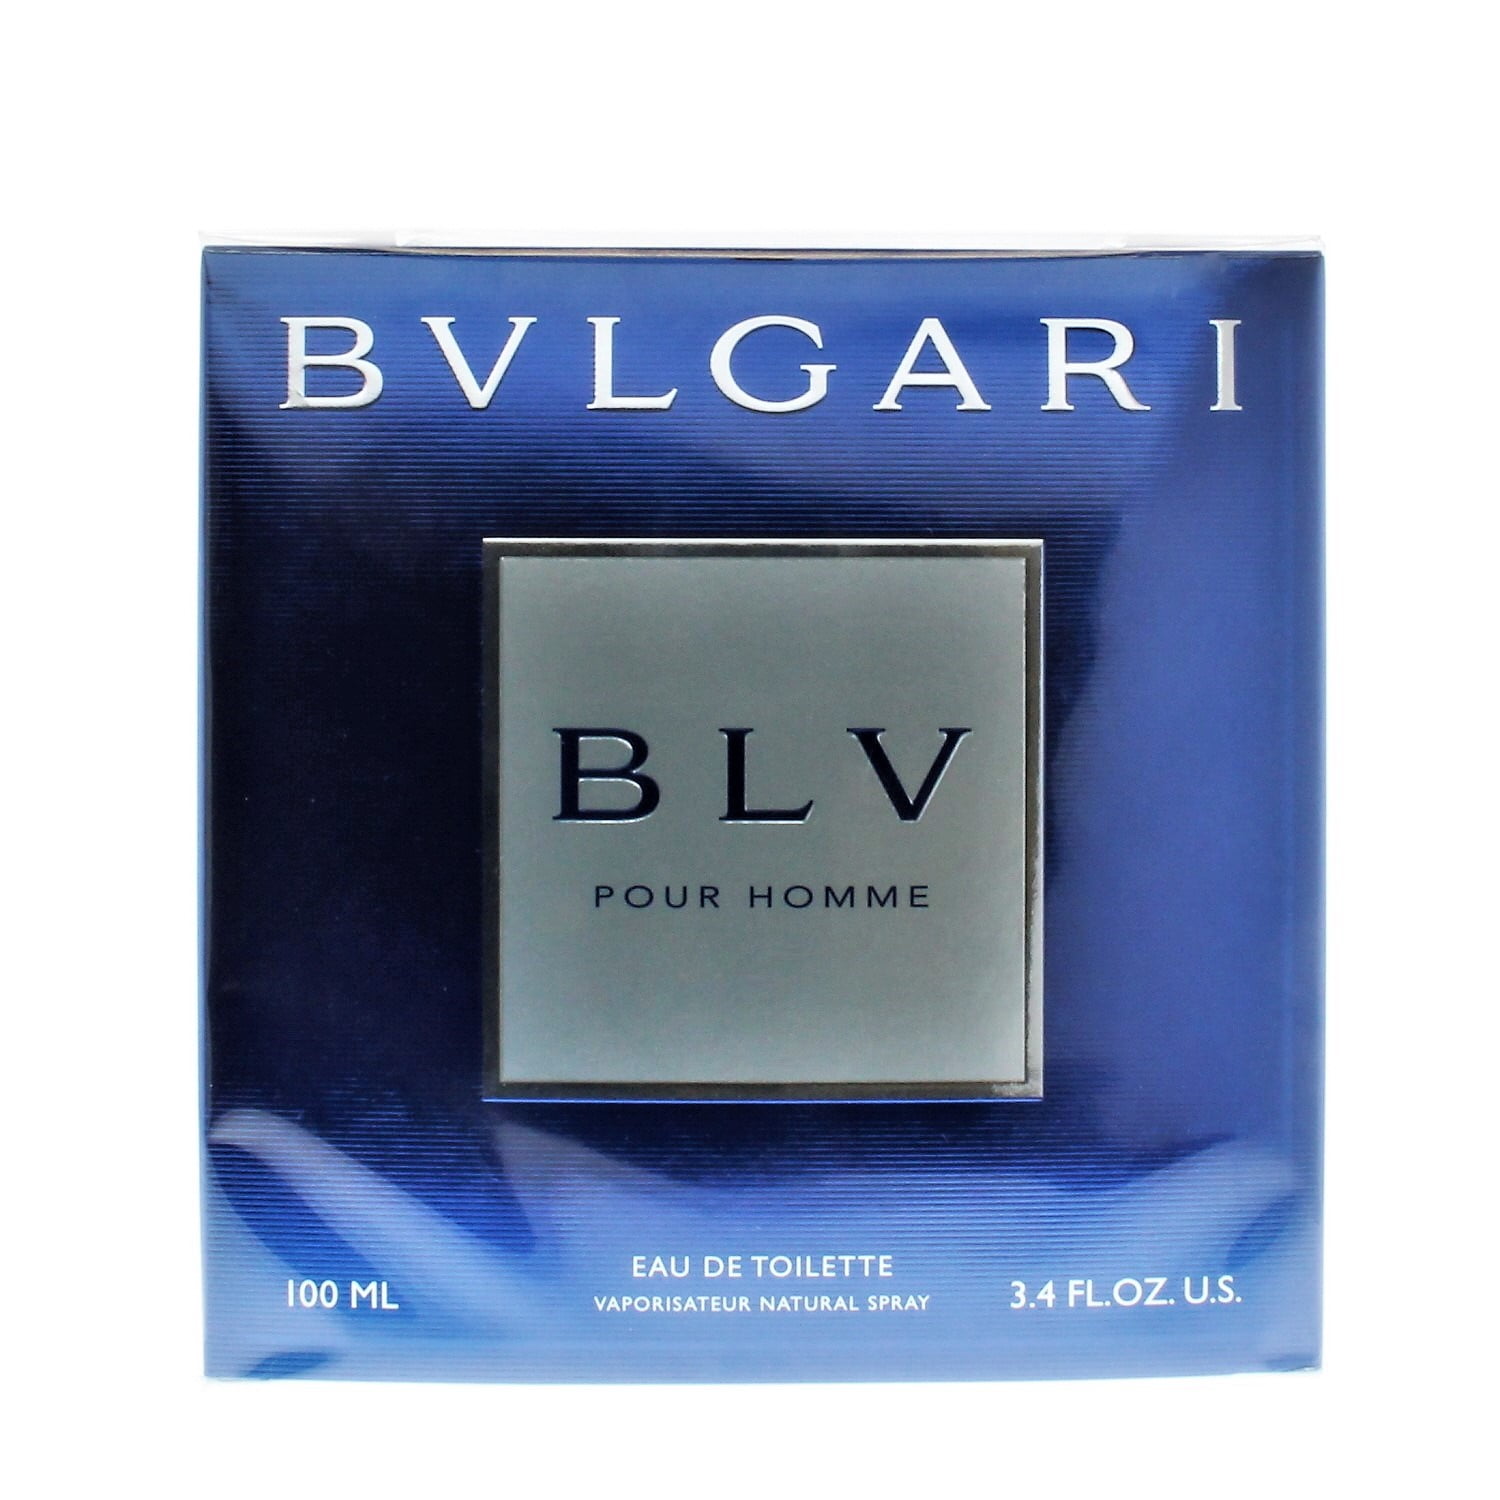 Men's perfume Toilet water Bvlgari BLV 30 ml